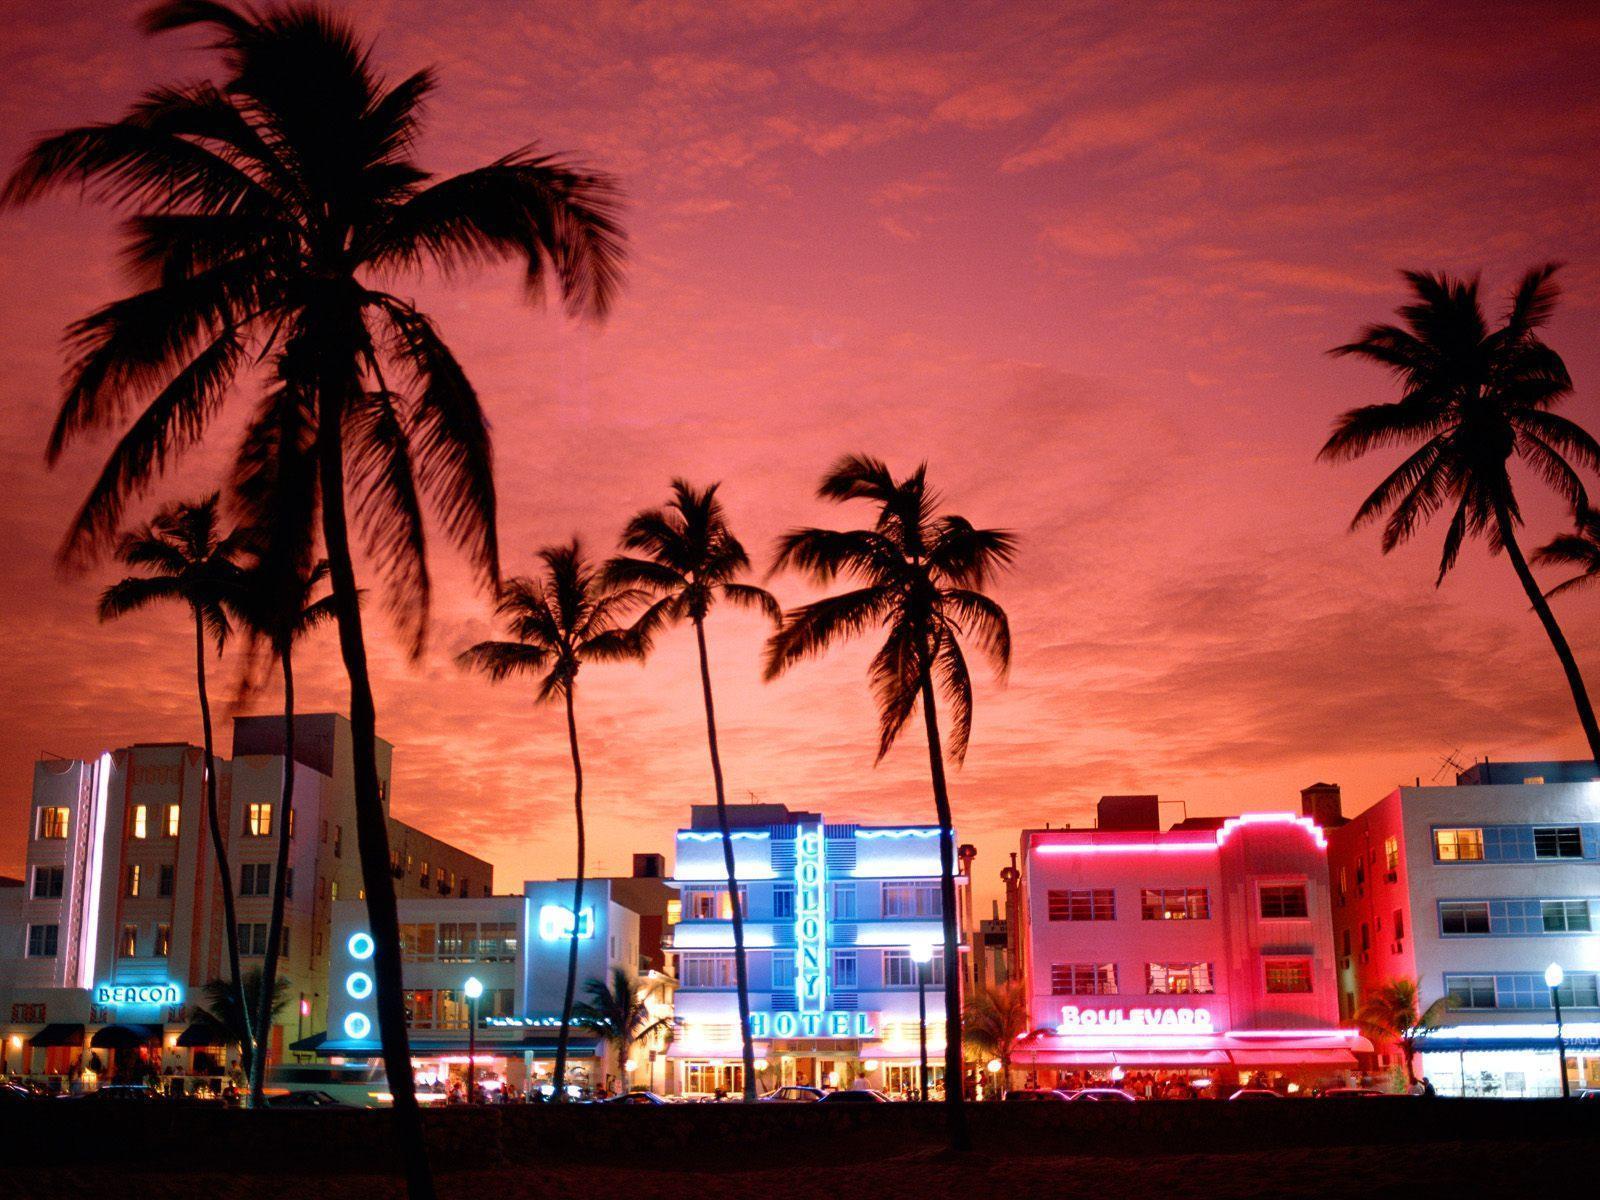 Nightlife south beach Miami Florida free desktop background